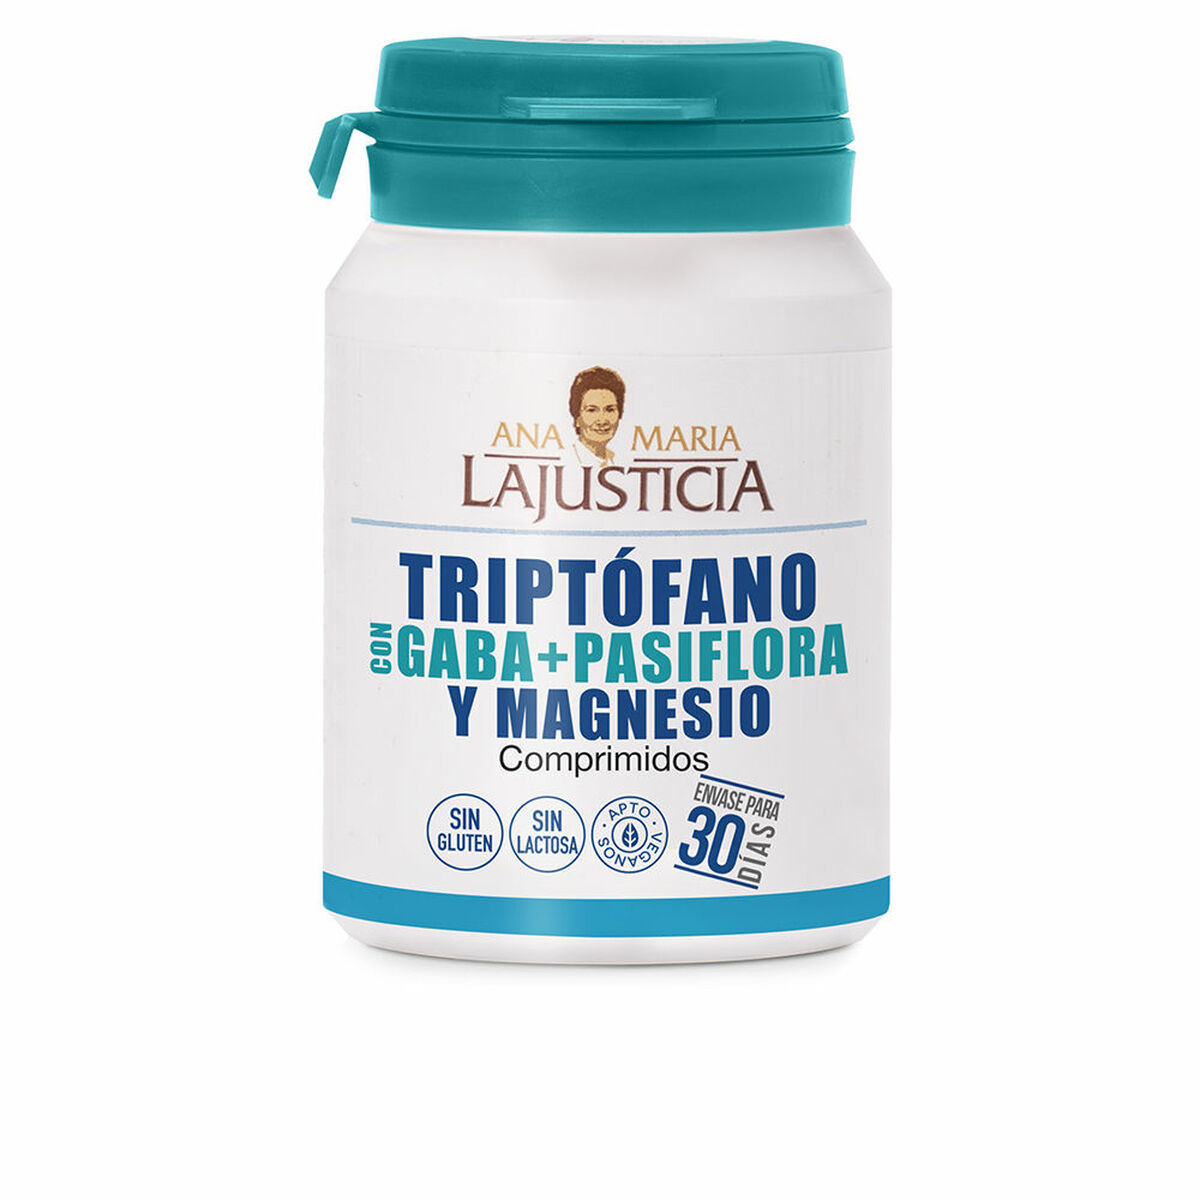 Ana Maria Lajusticia Carbonato de magnesio (130 g) desde 8,24 €